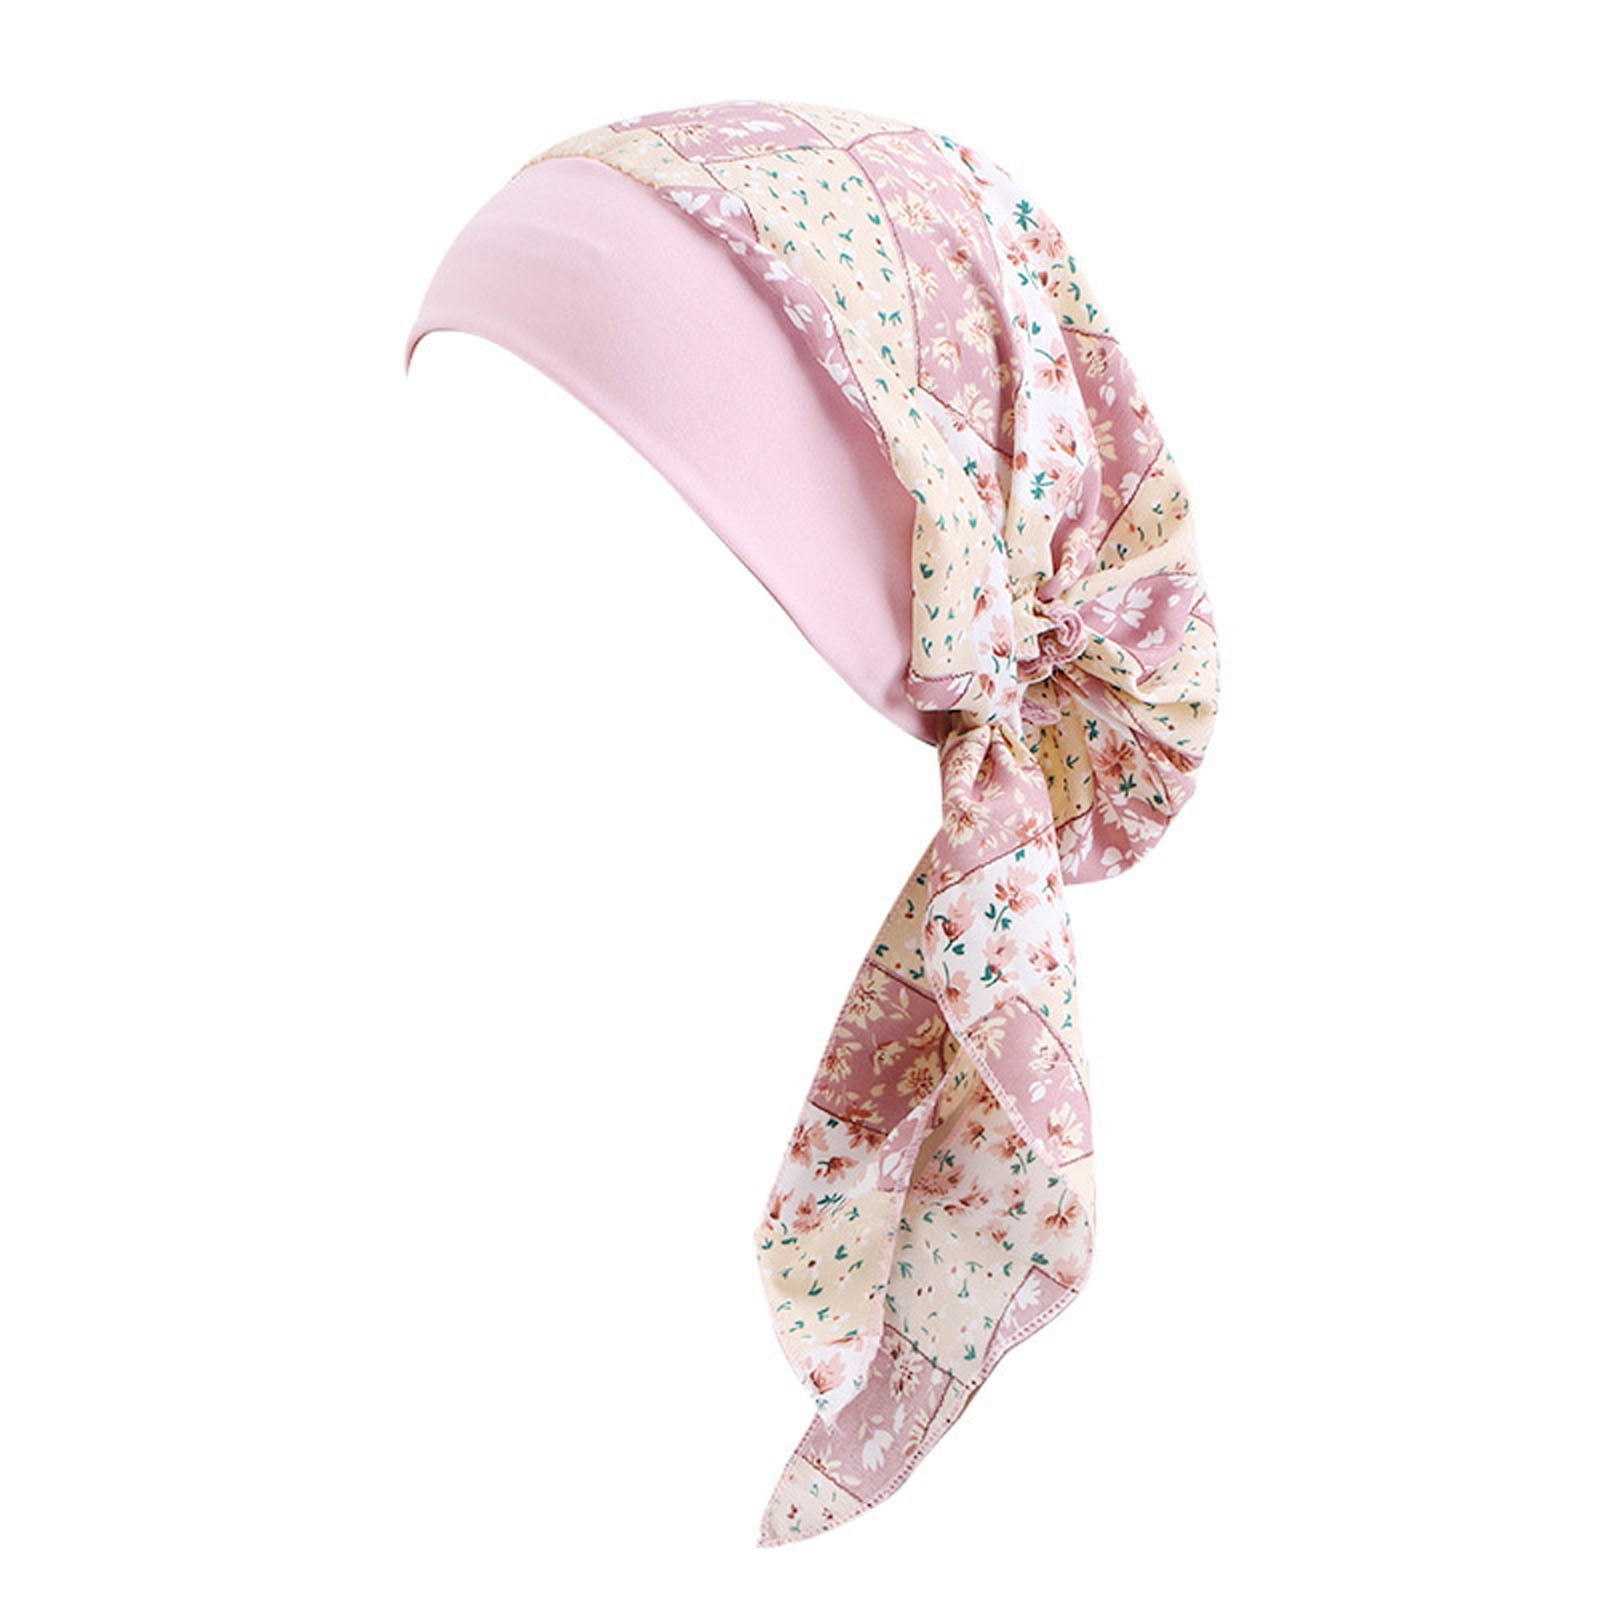 Frehsky Headbands for Women Women Print Headband Elastic Head Wrap Hair Band Bandana Headband Pink, Size: Small